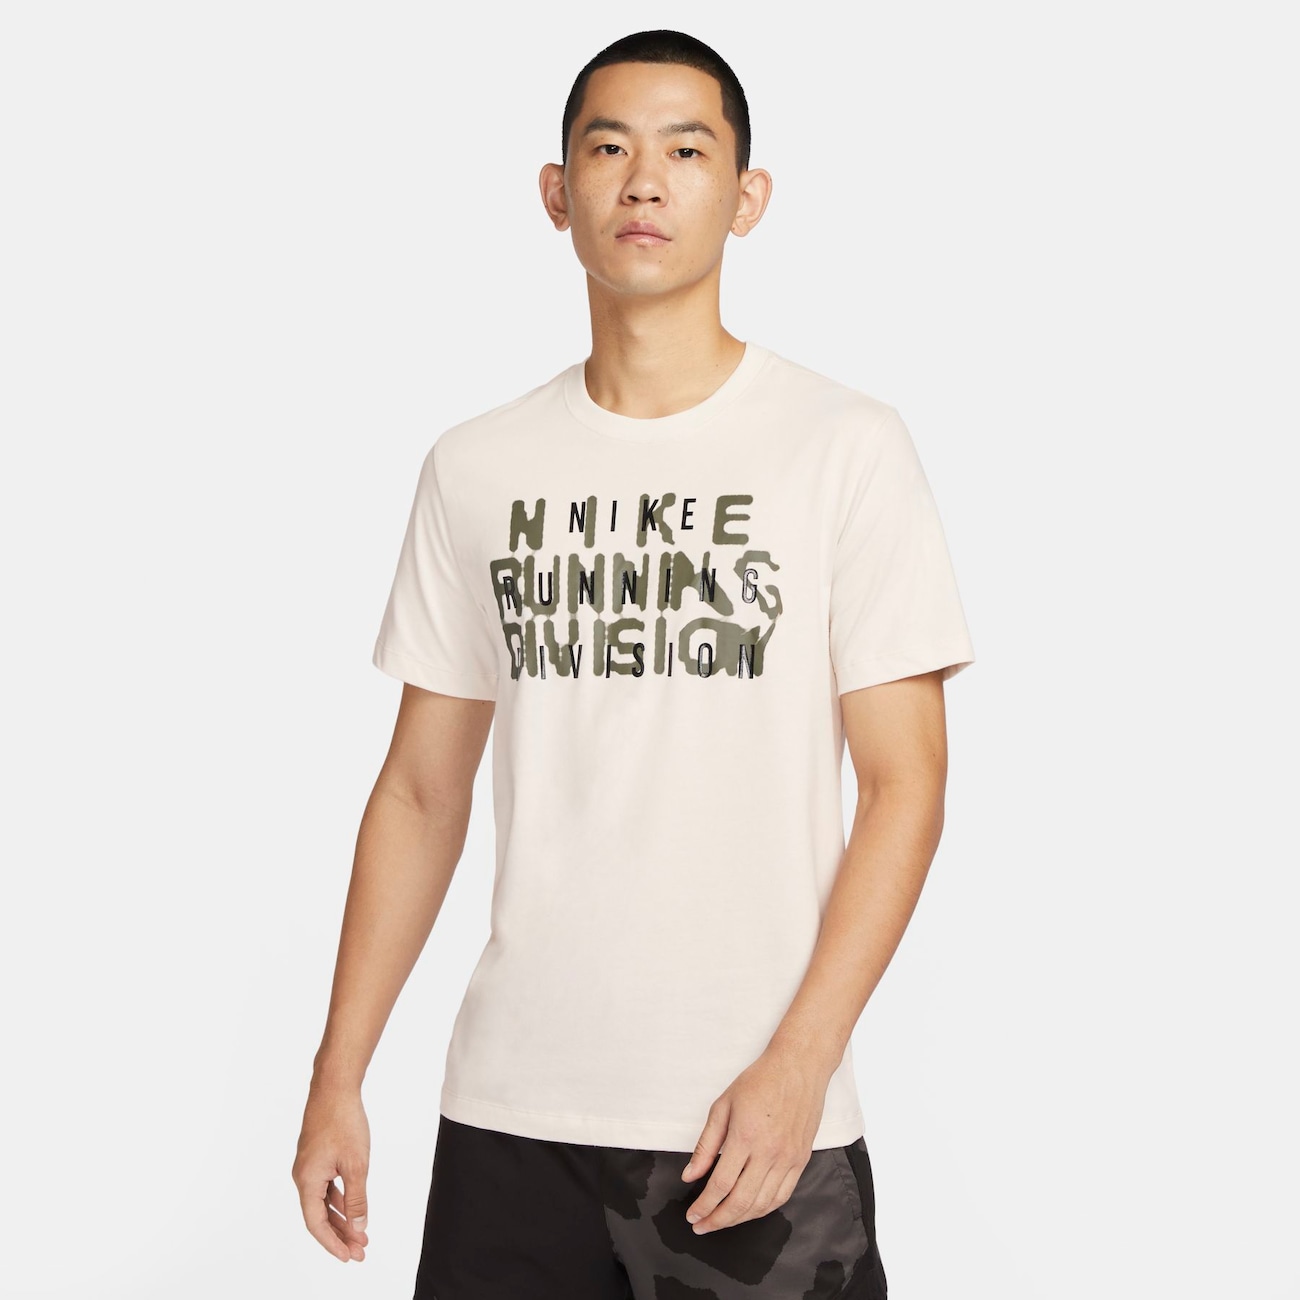 Camiseta Nike Running Division Masculina